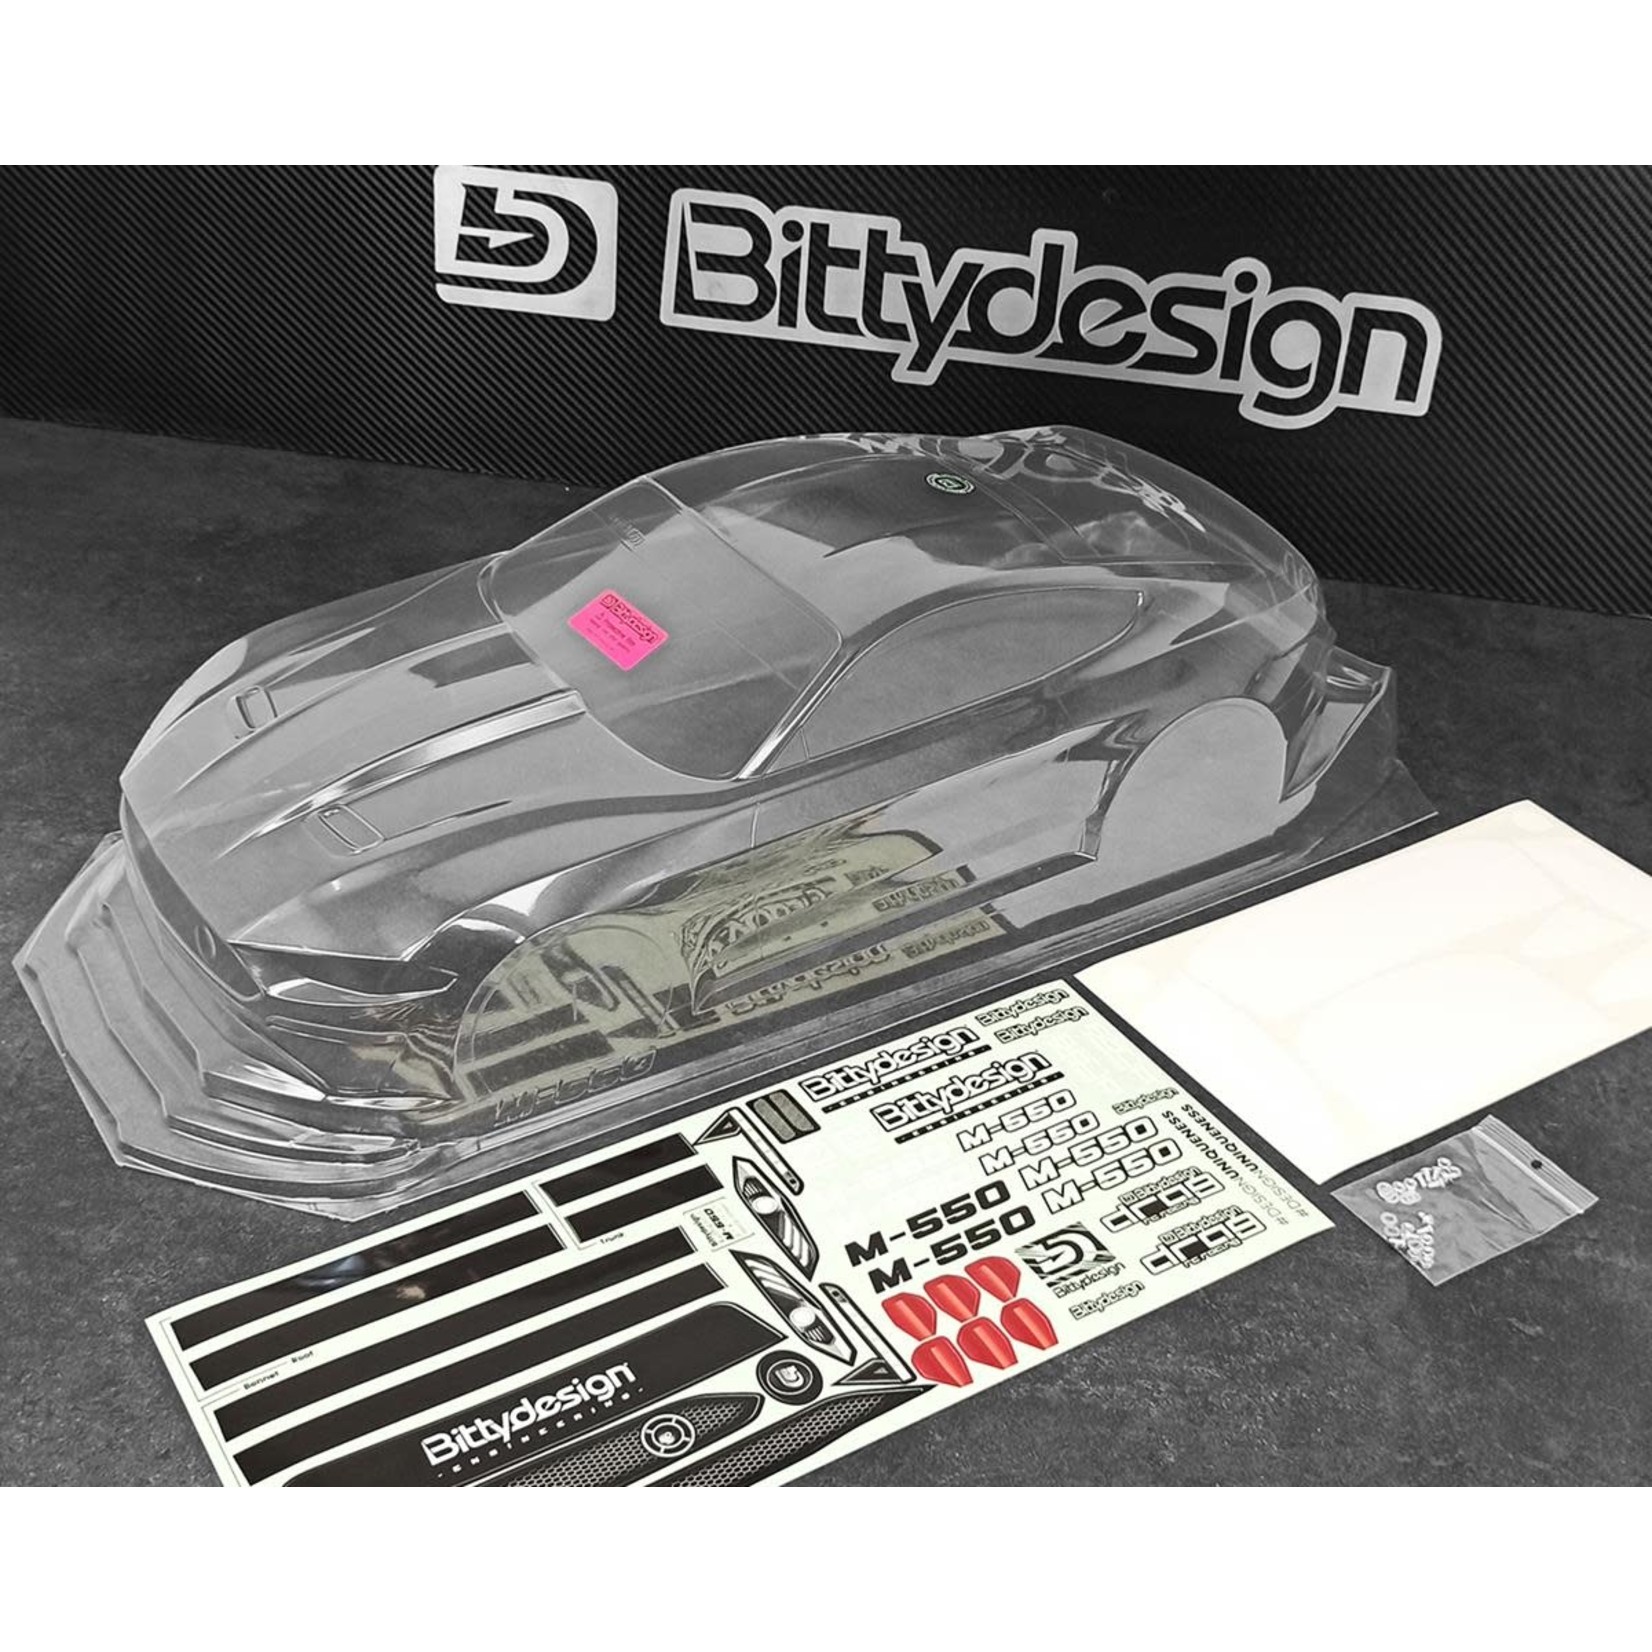 Bittydesign Bittydesign M-550 1/10 Pro No Prep Street Eliminator Drag Racing Body (Clear) #M-550